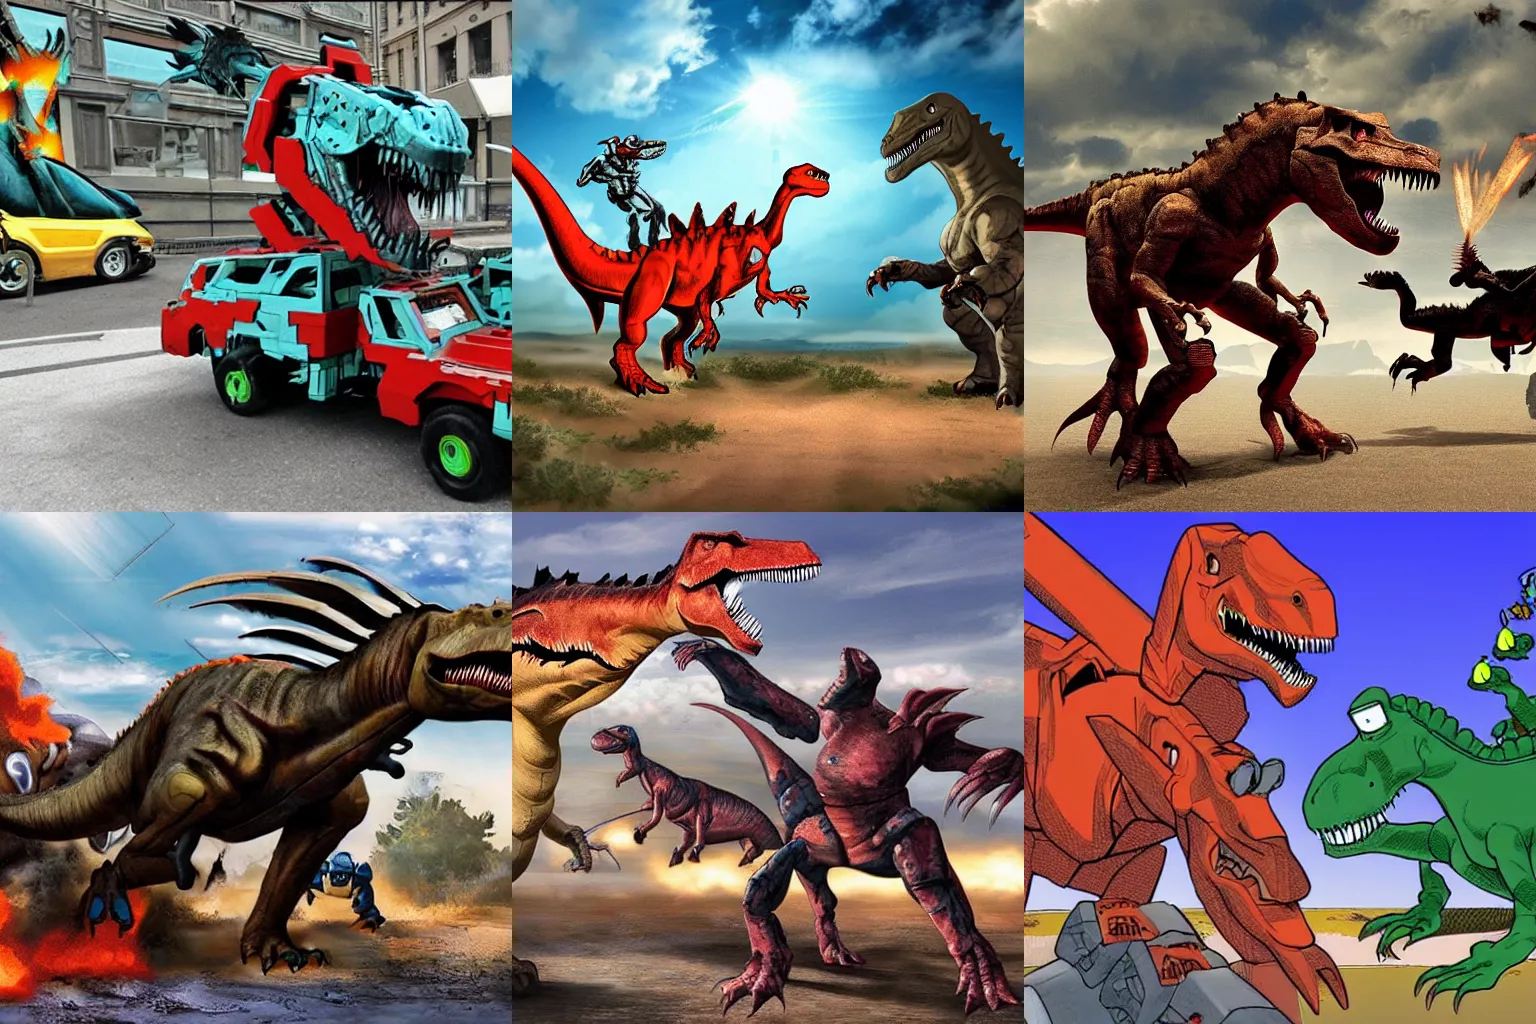 Prompt: Dinosaur fights transformers